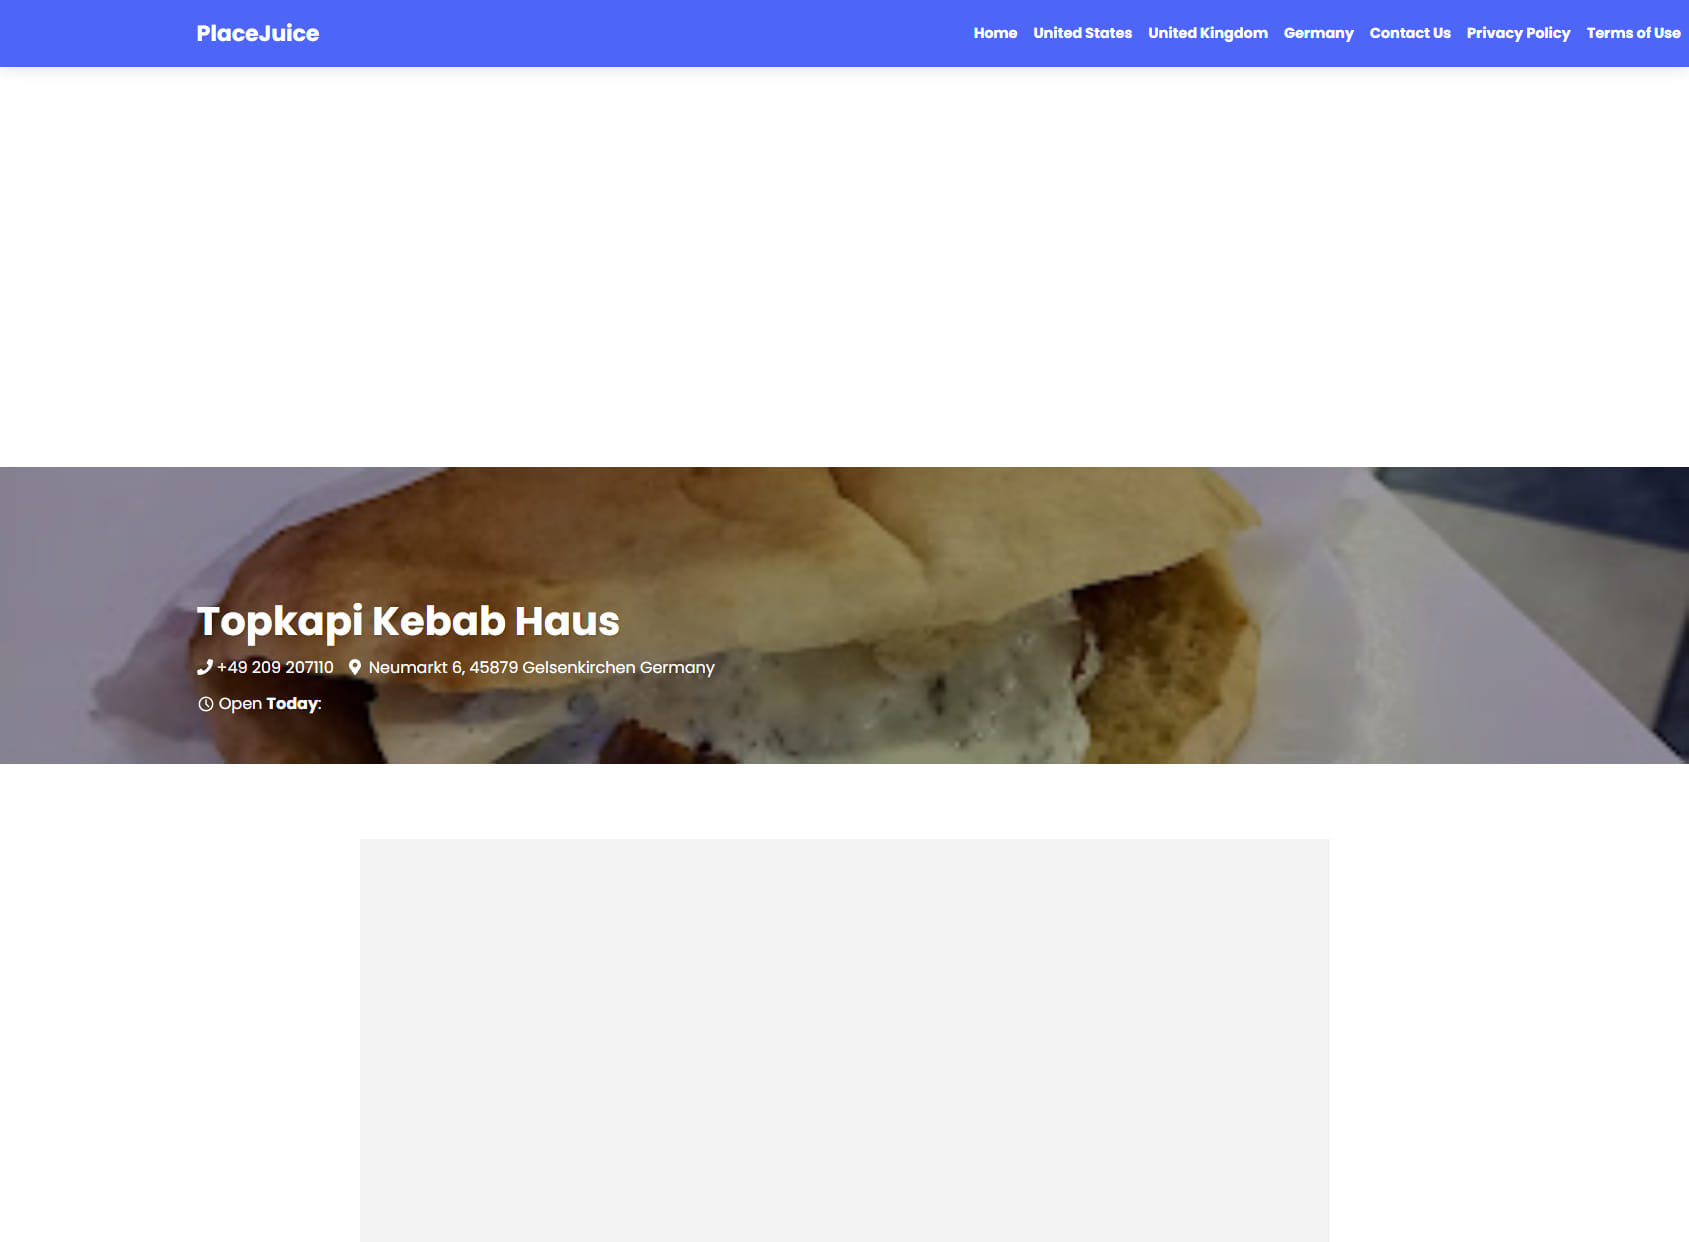 Topkapi Kebab Haus